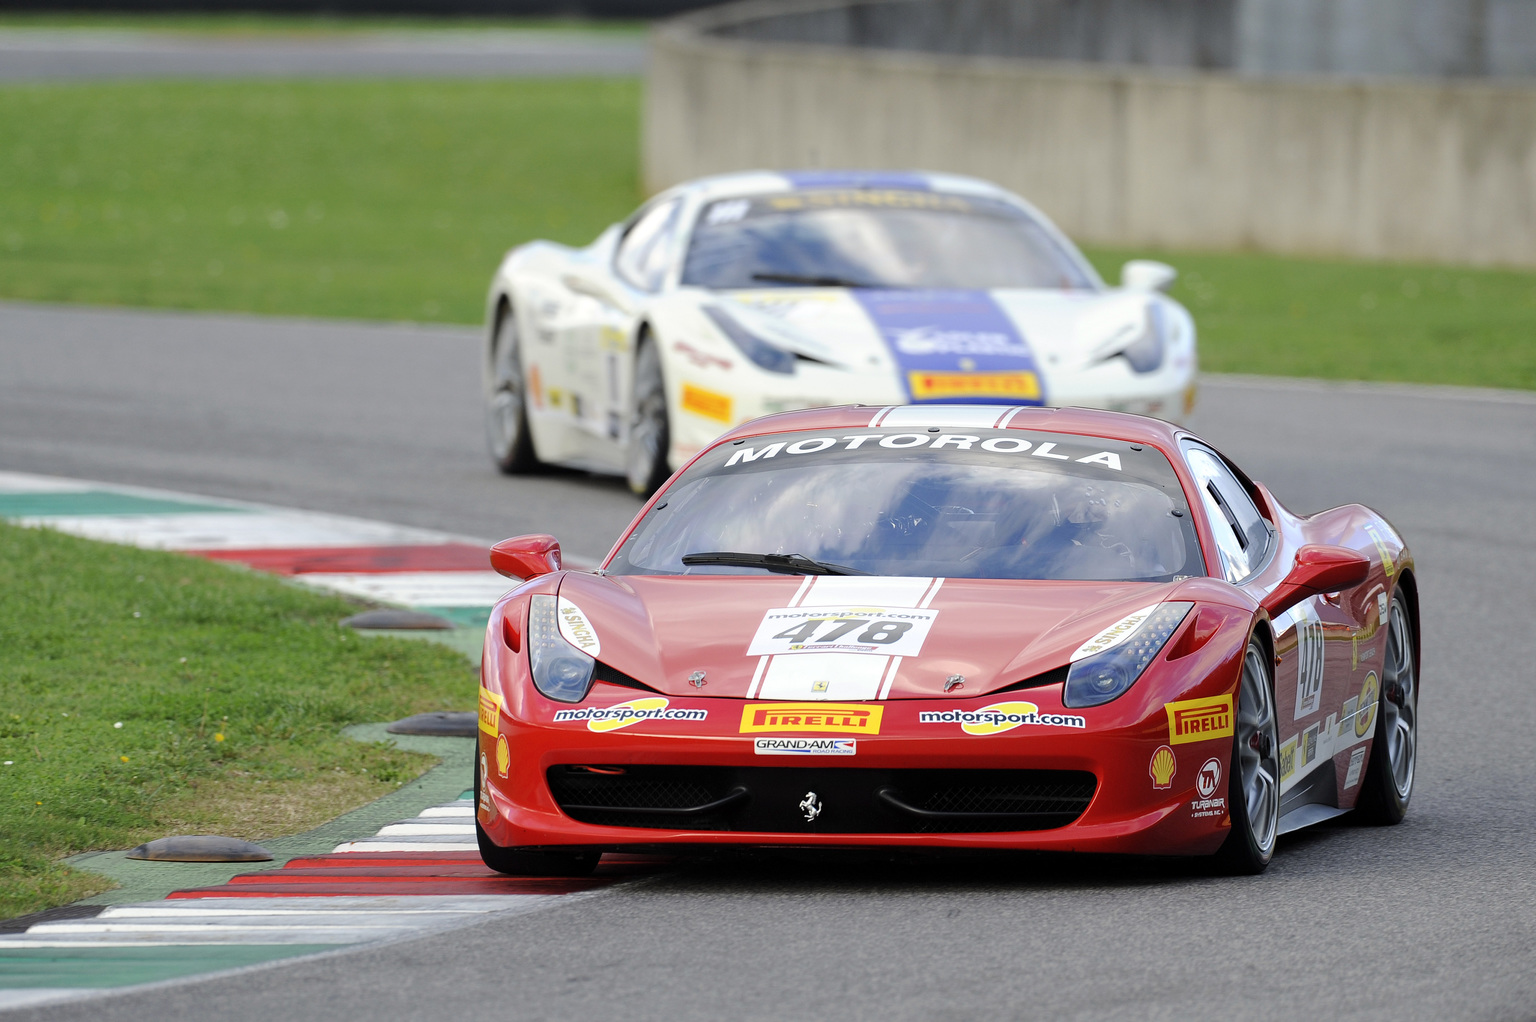 2013 Finali Mondiali Ferrari-3